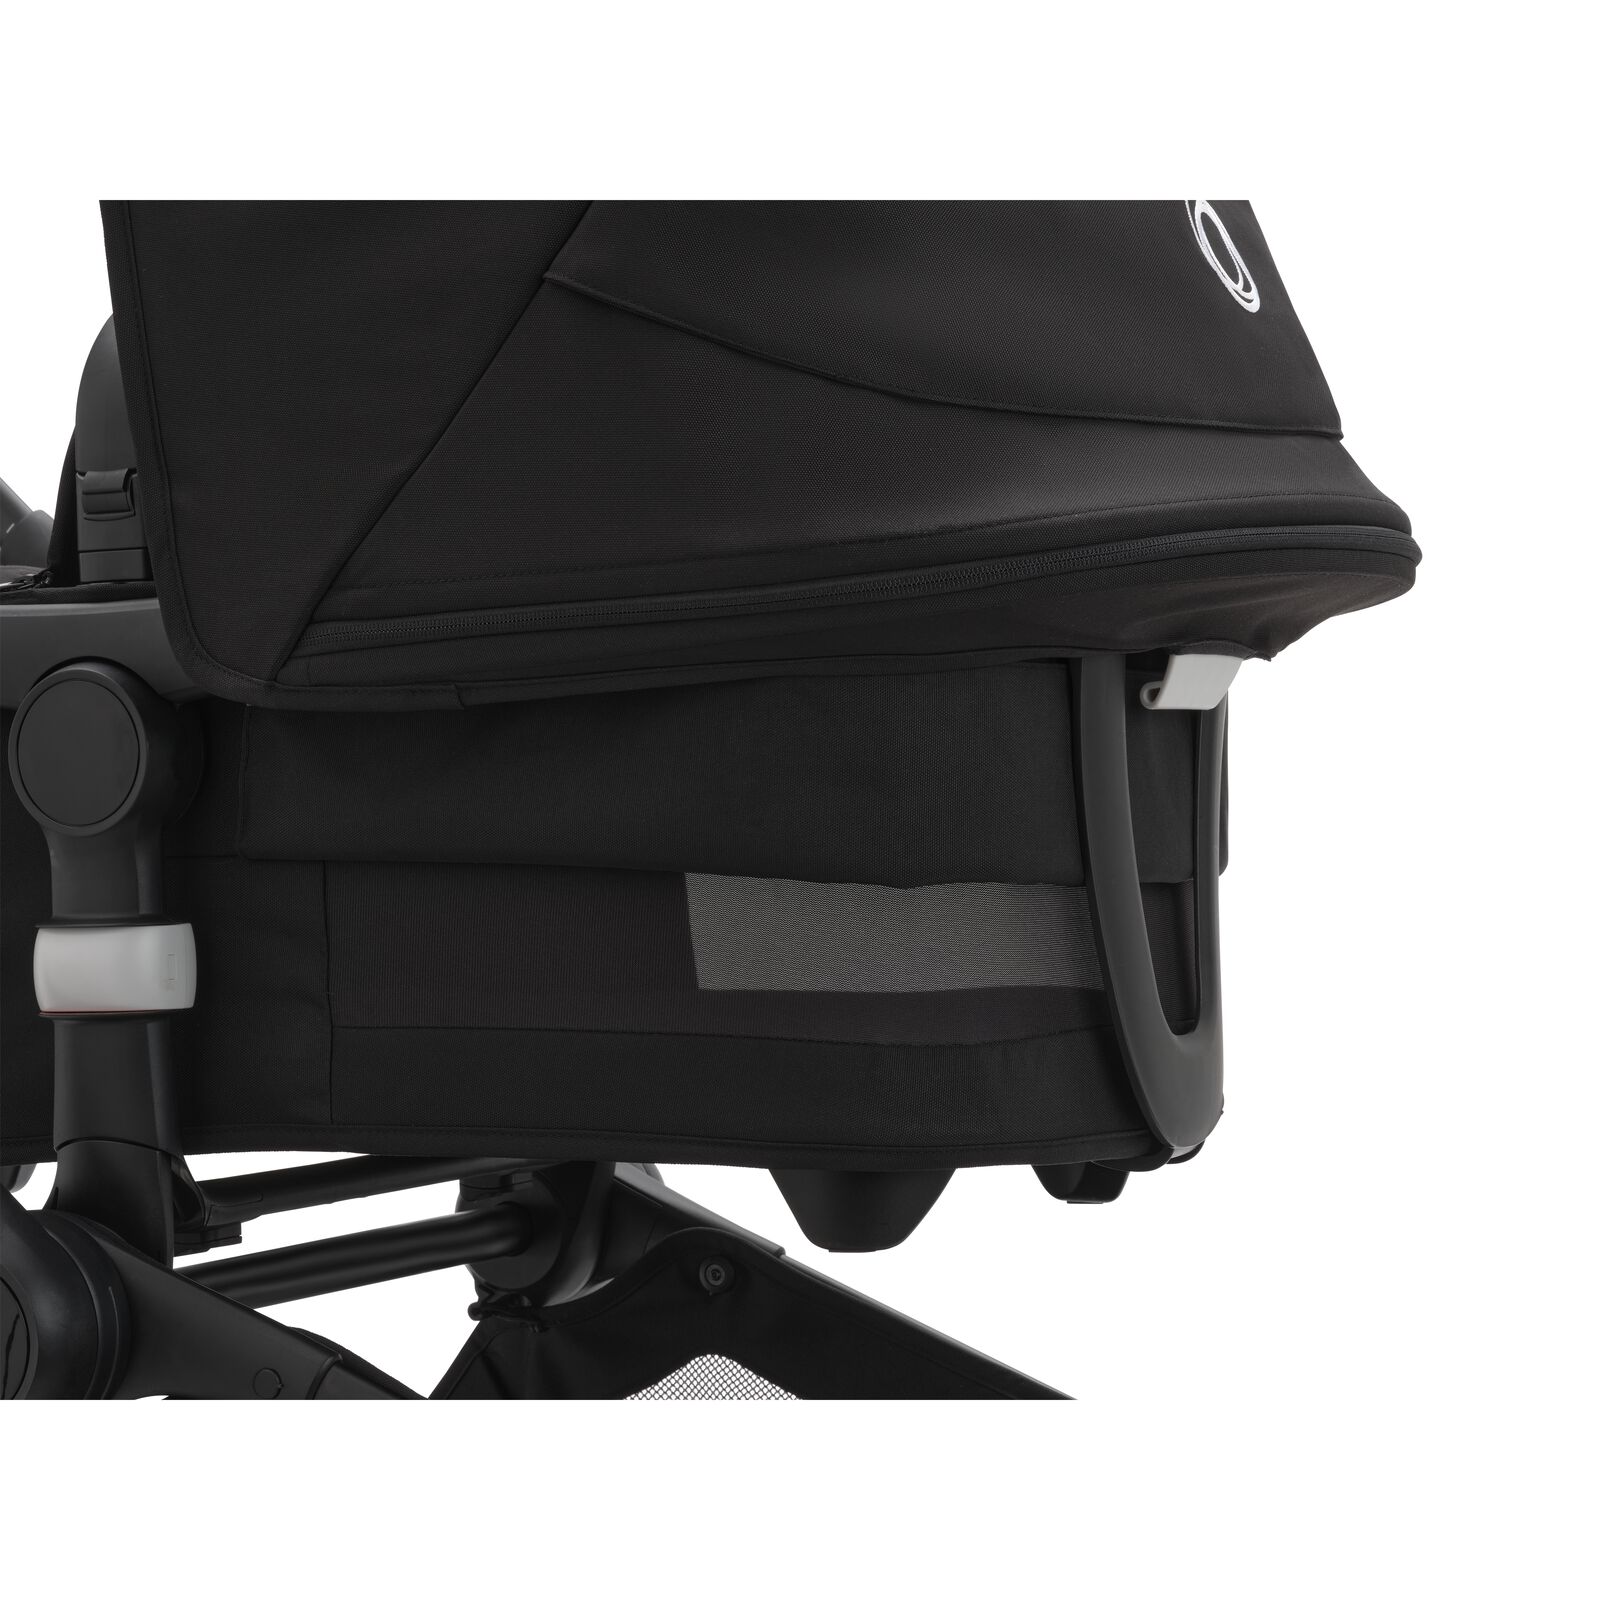 Bugaboo Fox 5 bassinet and seat stroller black base, midnight black fabrics, stormy blue sun canopy